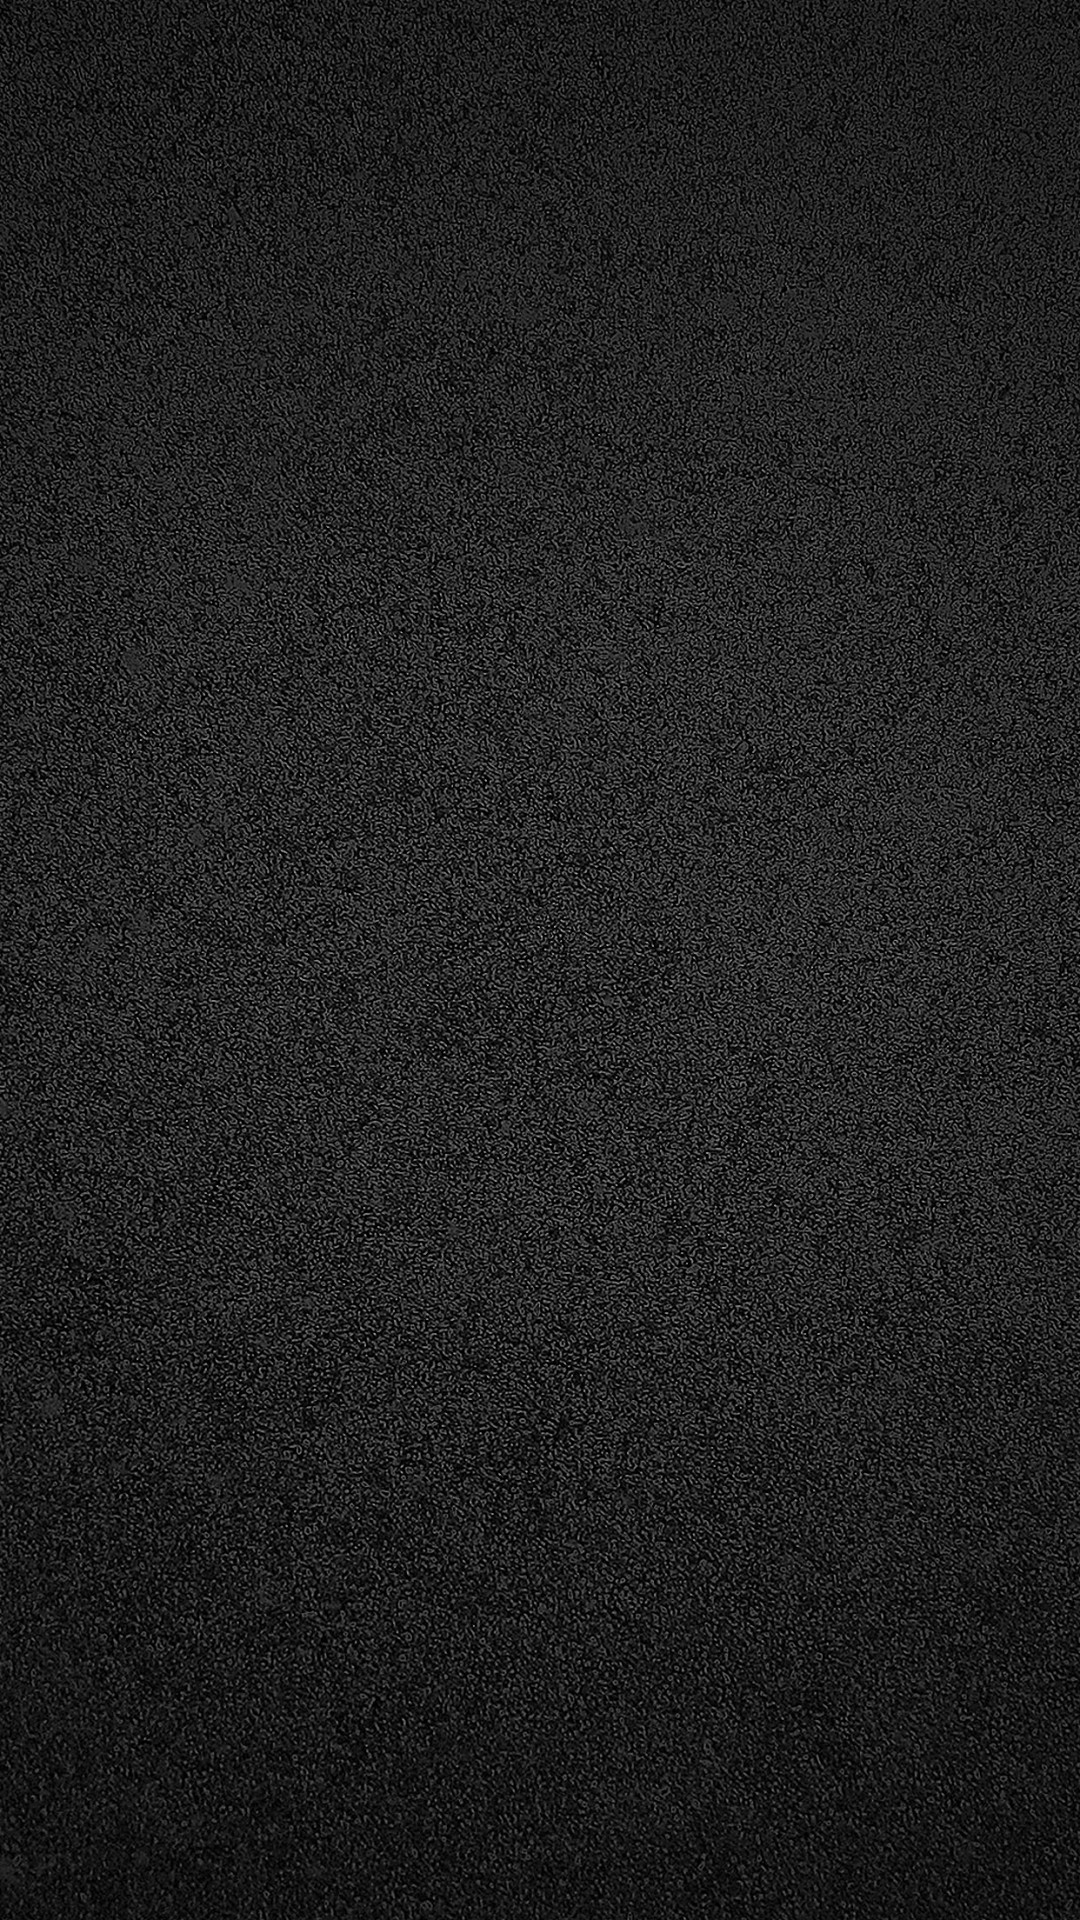 1080x1920 download simple dark wallpaper for iphone 6s plus 